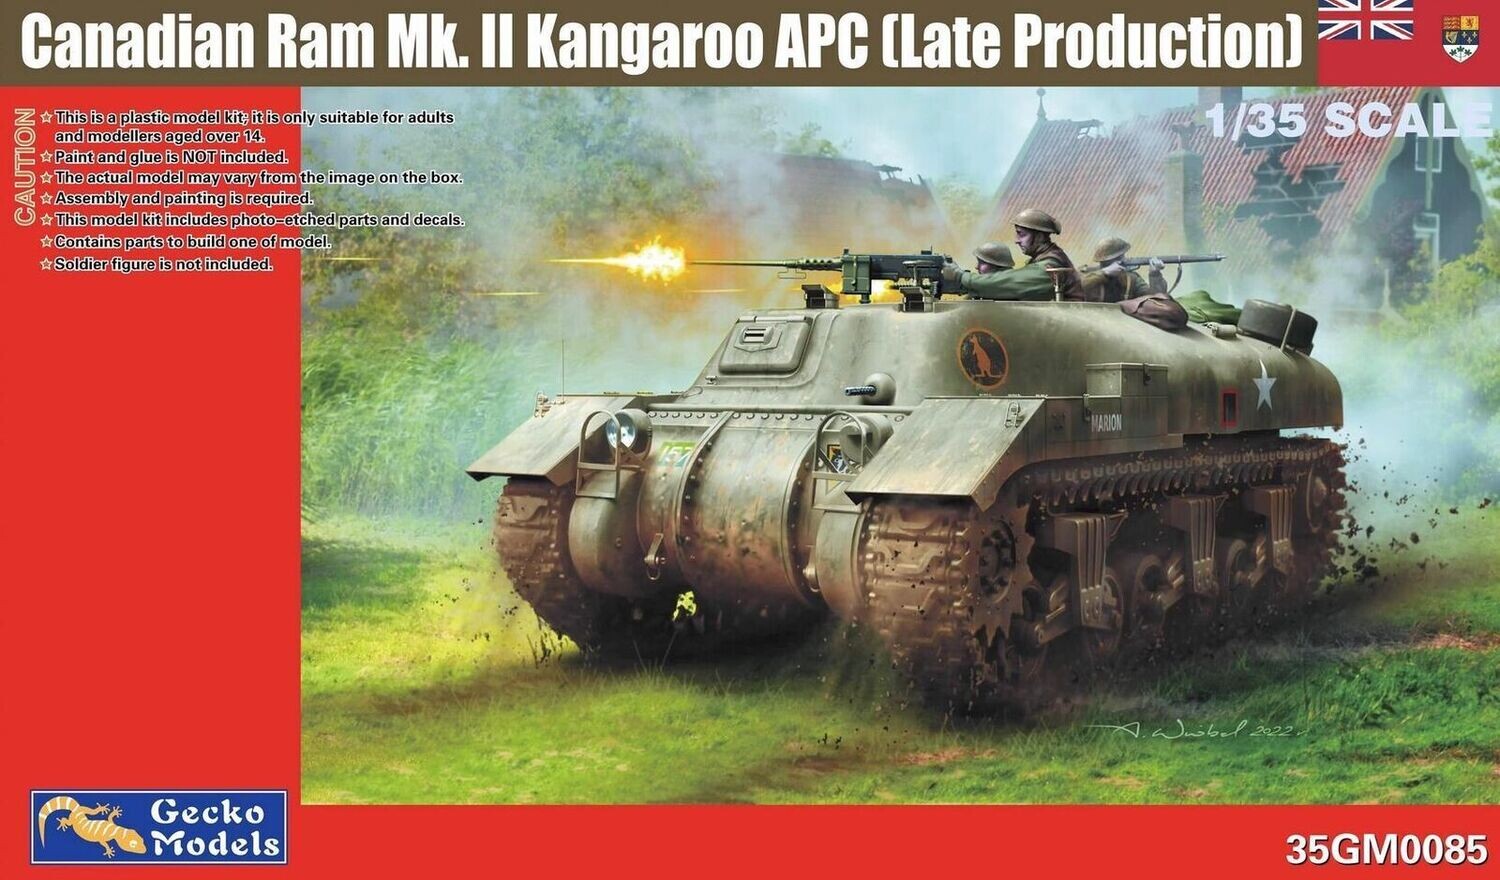 Gecko Models 35GM0085 1/35 Canadian Ram Mk II Kangaroo APC ( Late Production )